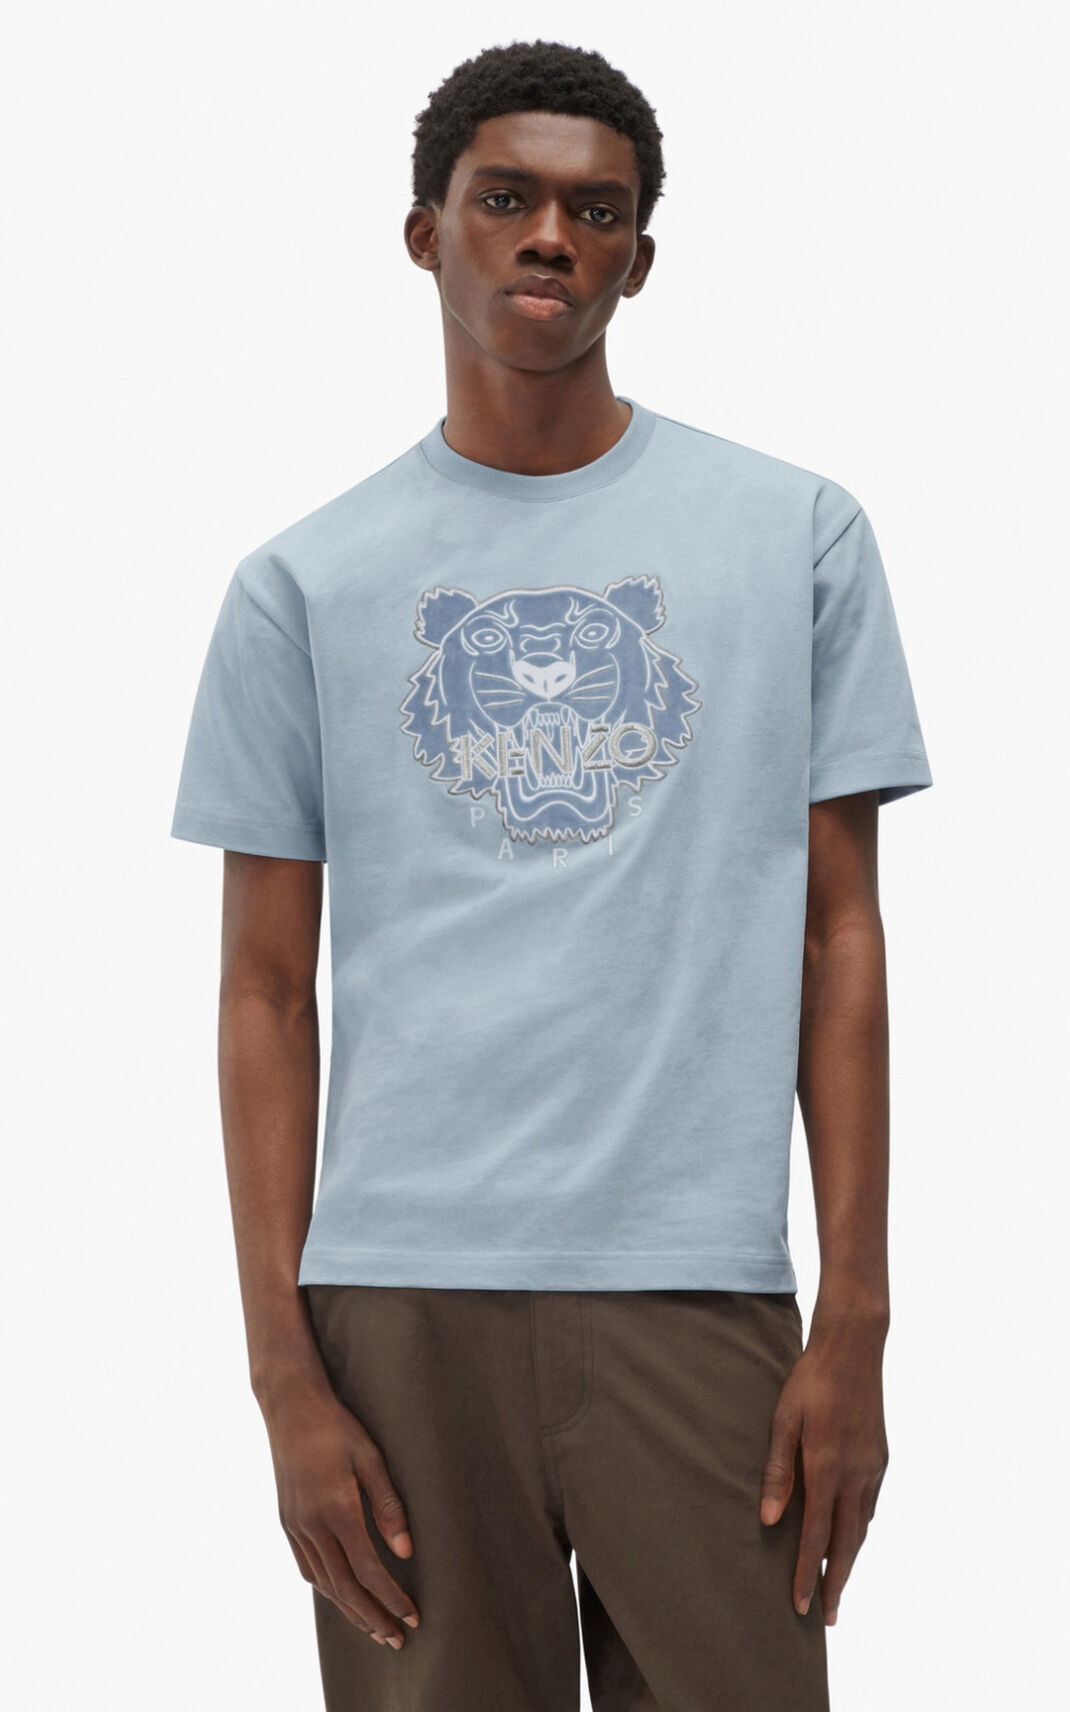 Kenzo The 冬 Capsule 虎 Tシャツ メンズ グレー - SQLRVK253